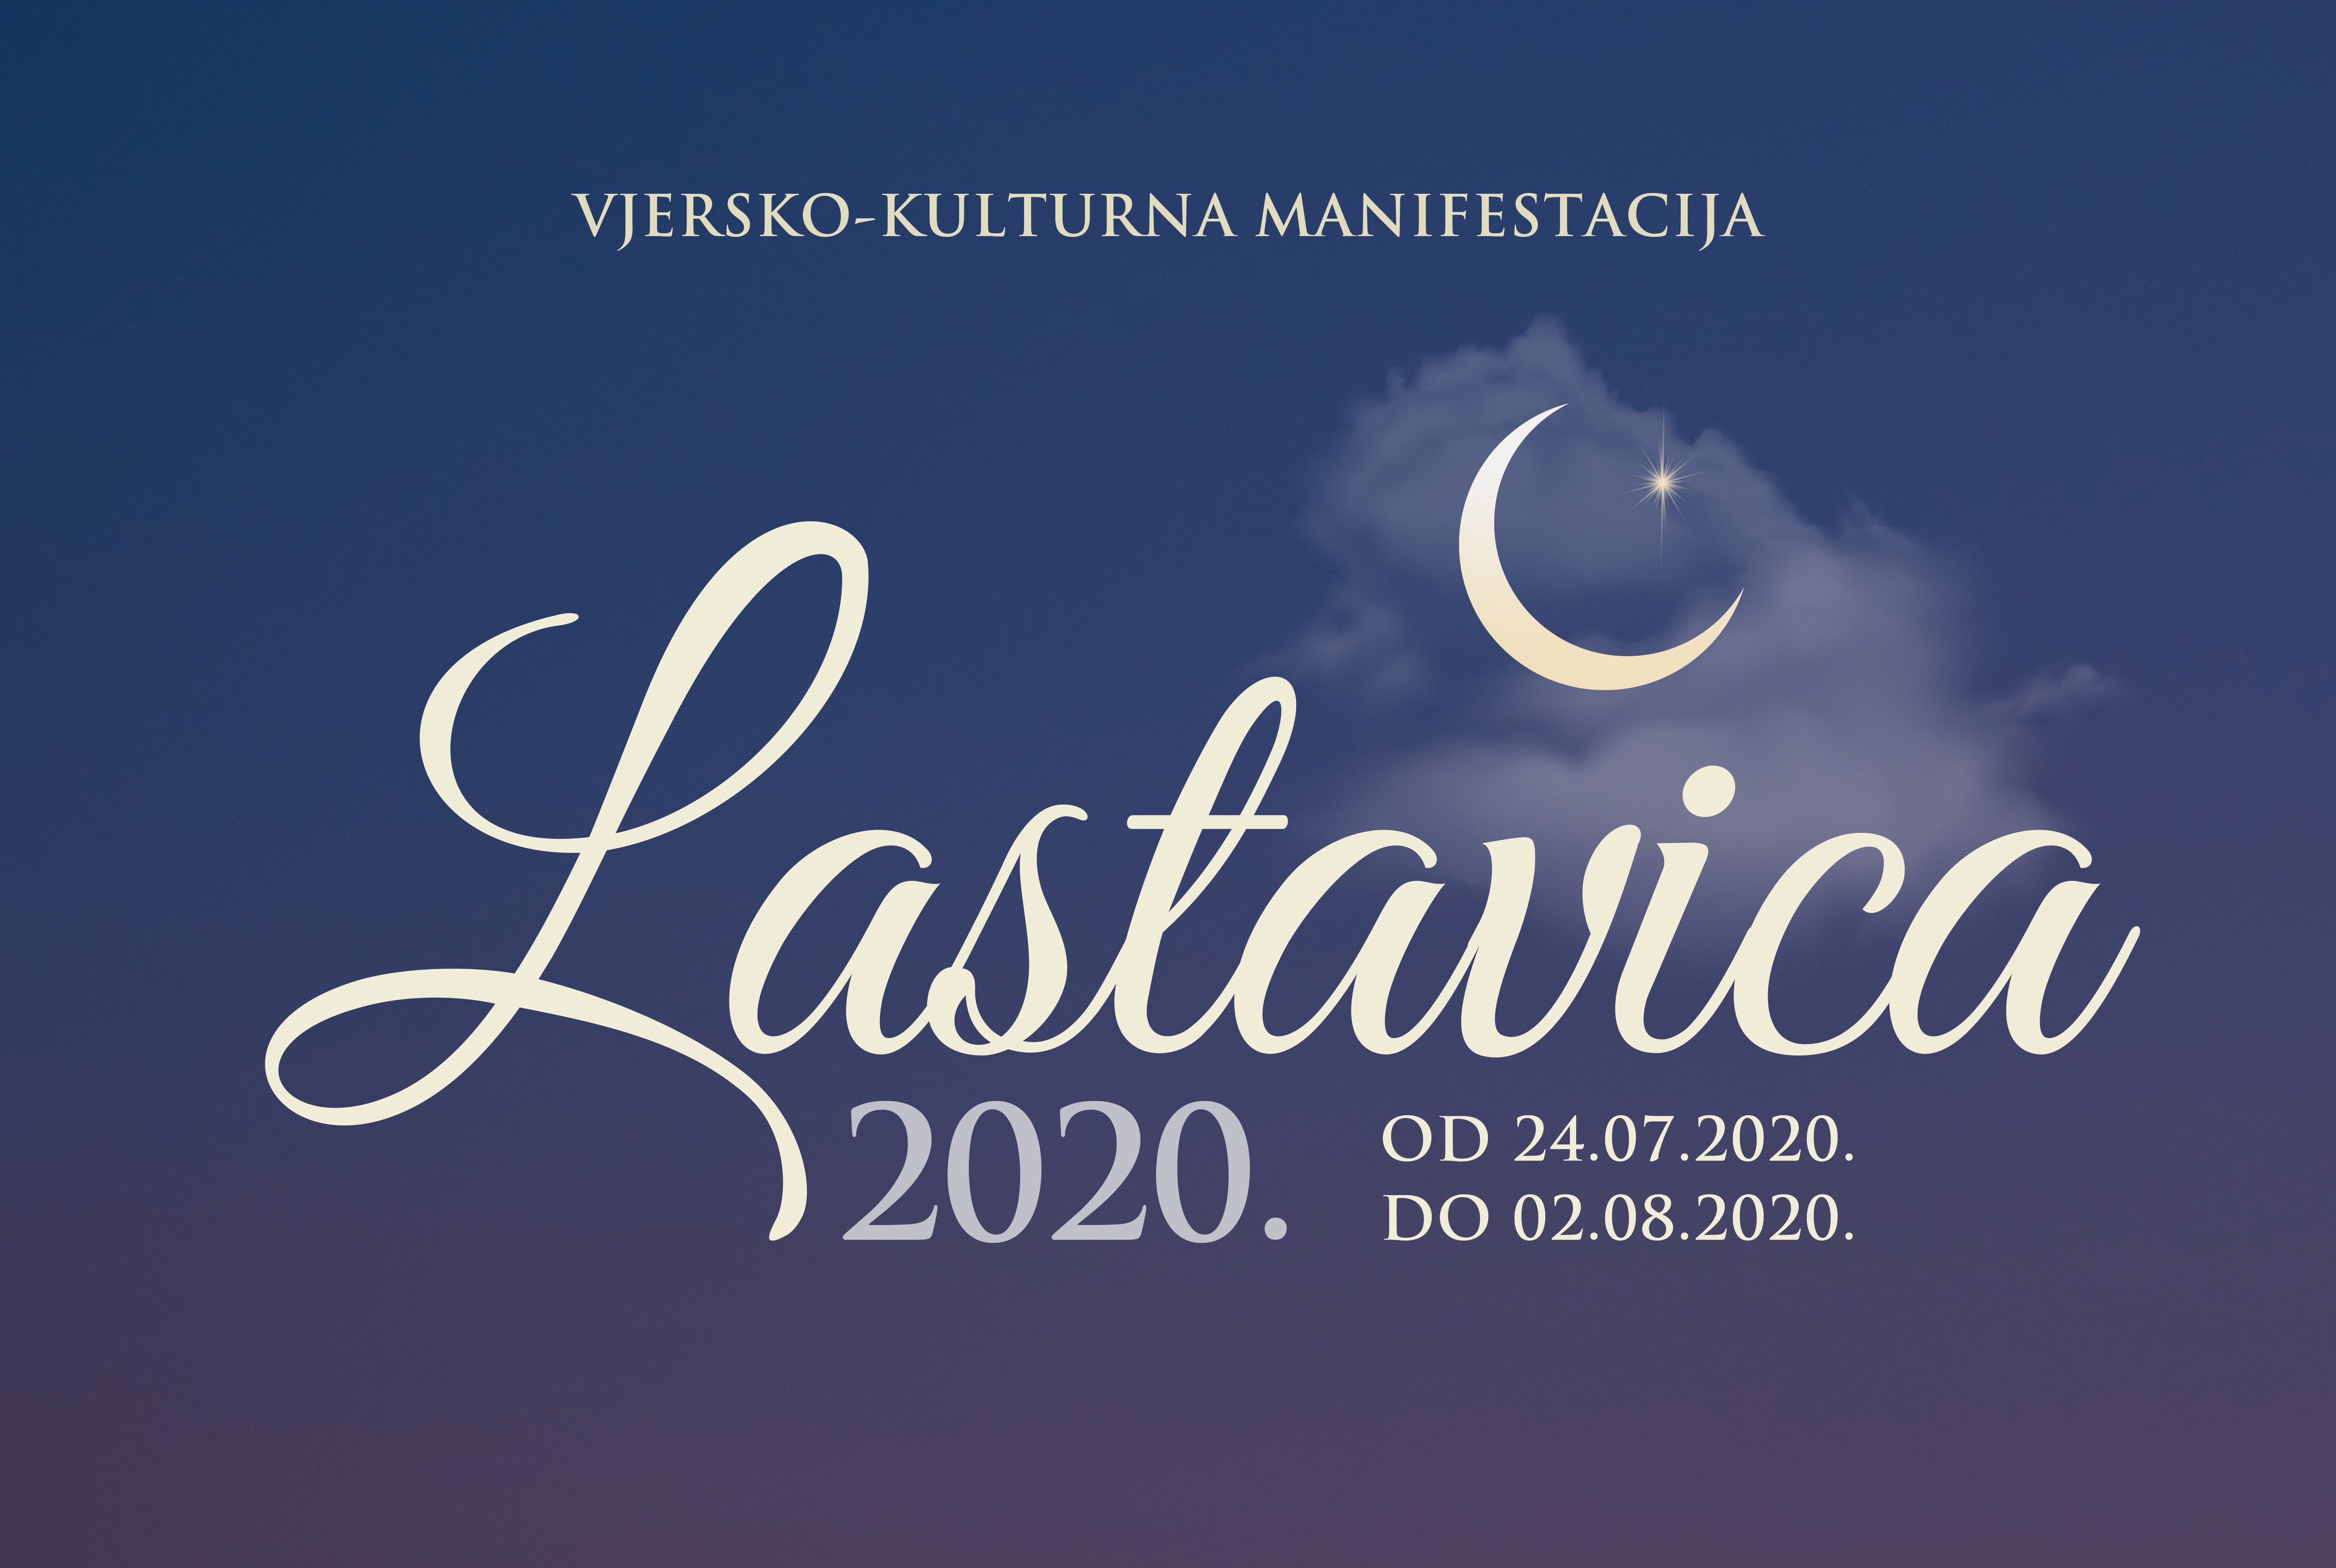 Vjersko-kulturna manifestacija “Lastavica 2020.”